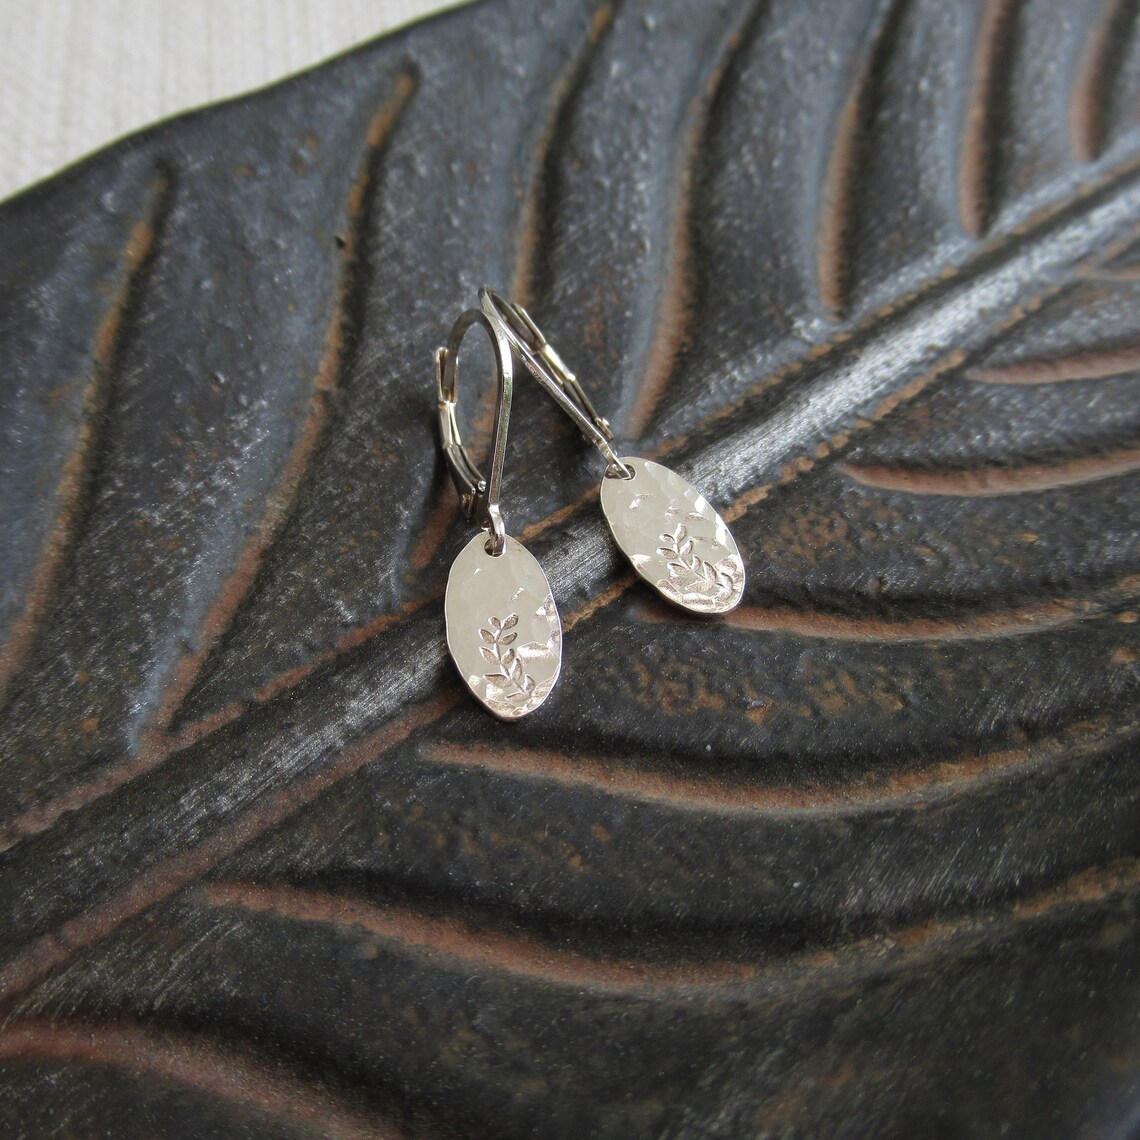 Silver Earrings Online: Explore Sterling Silver Earrings designs for Women,  Girls and Ladies Online| FOURSEVEN